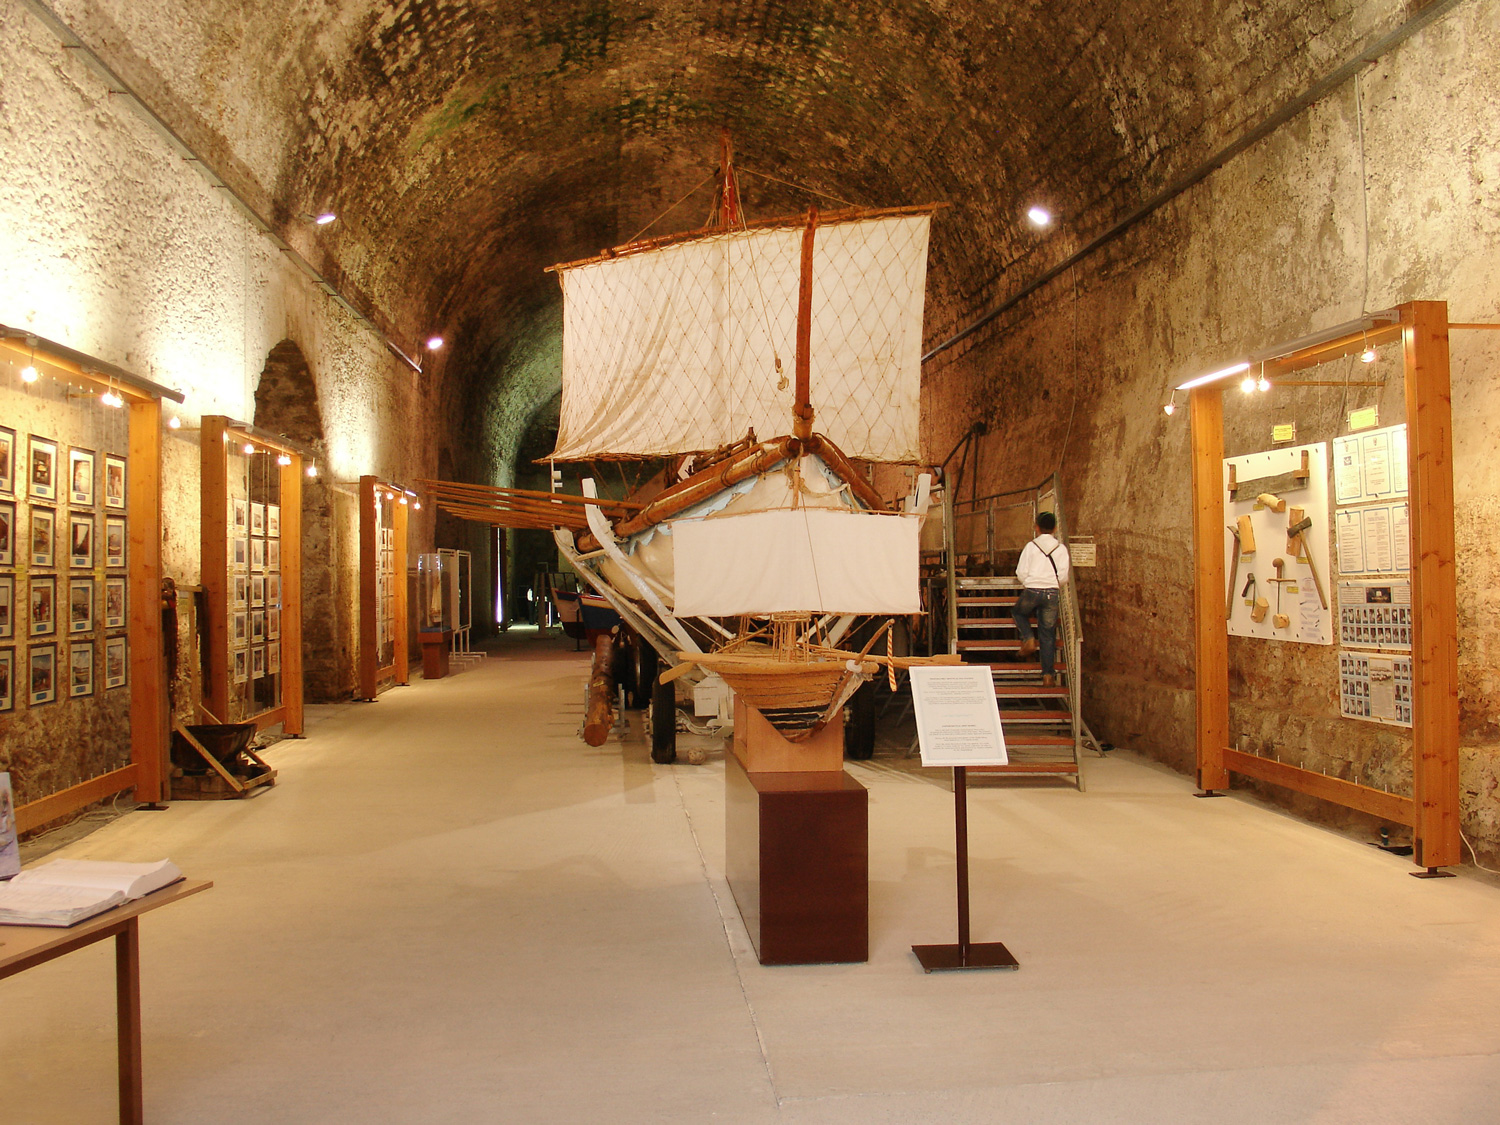 Display of The Minoan Ship